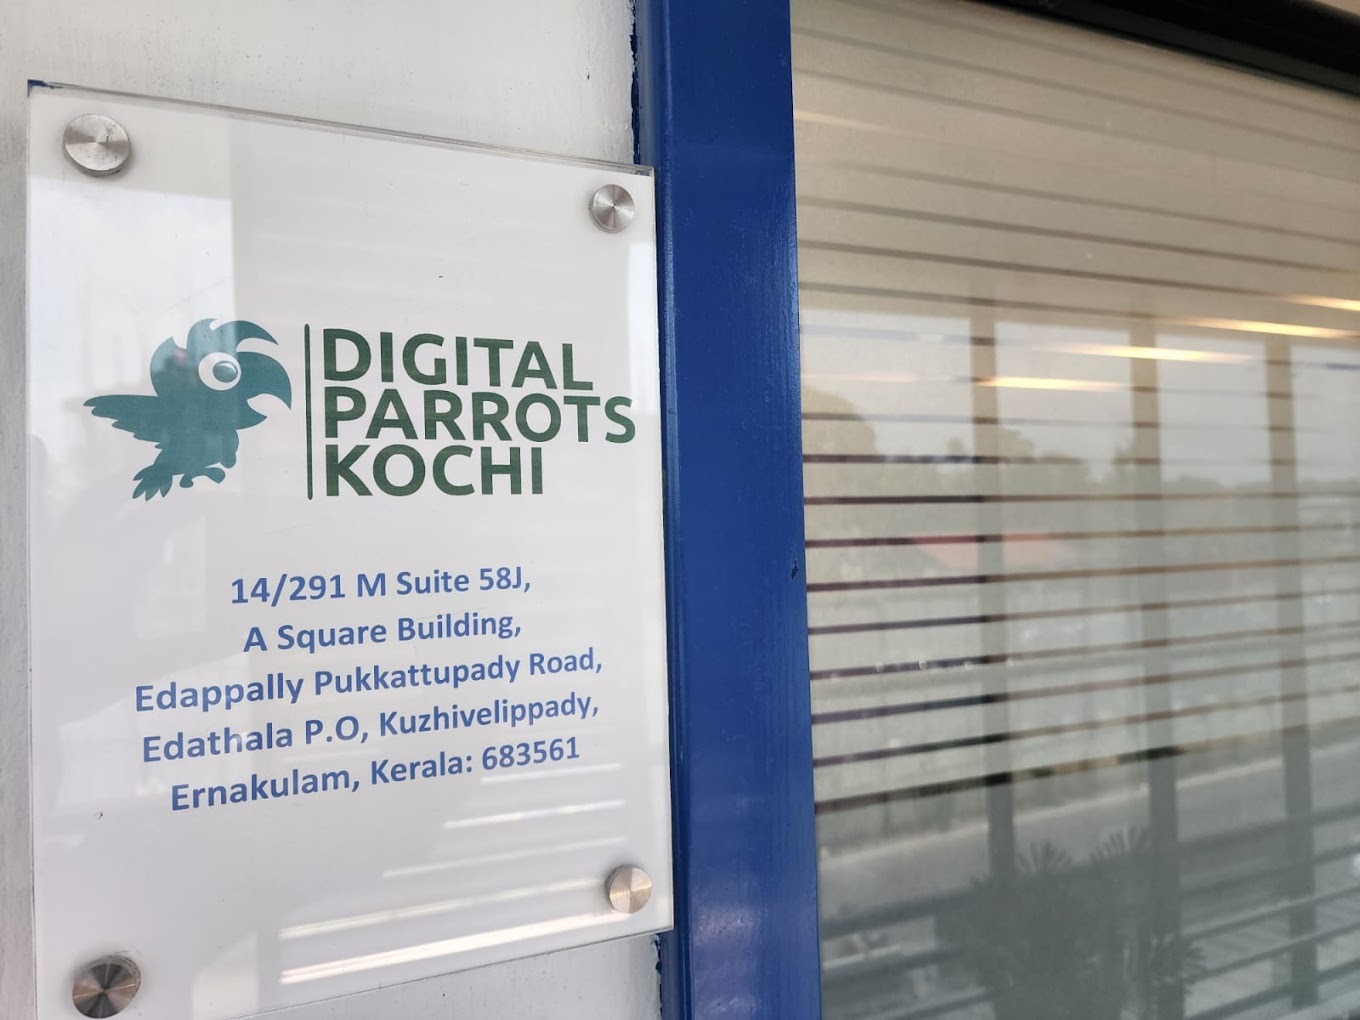 Digital Parrots Kochi: Elevating Businesses with Expert Digital Marketing Solutions